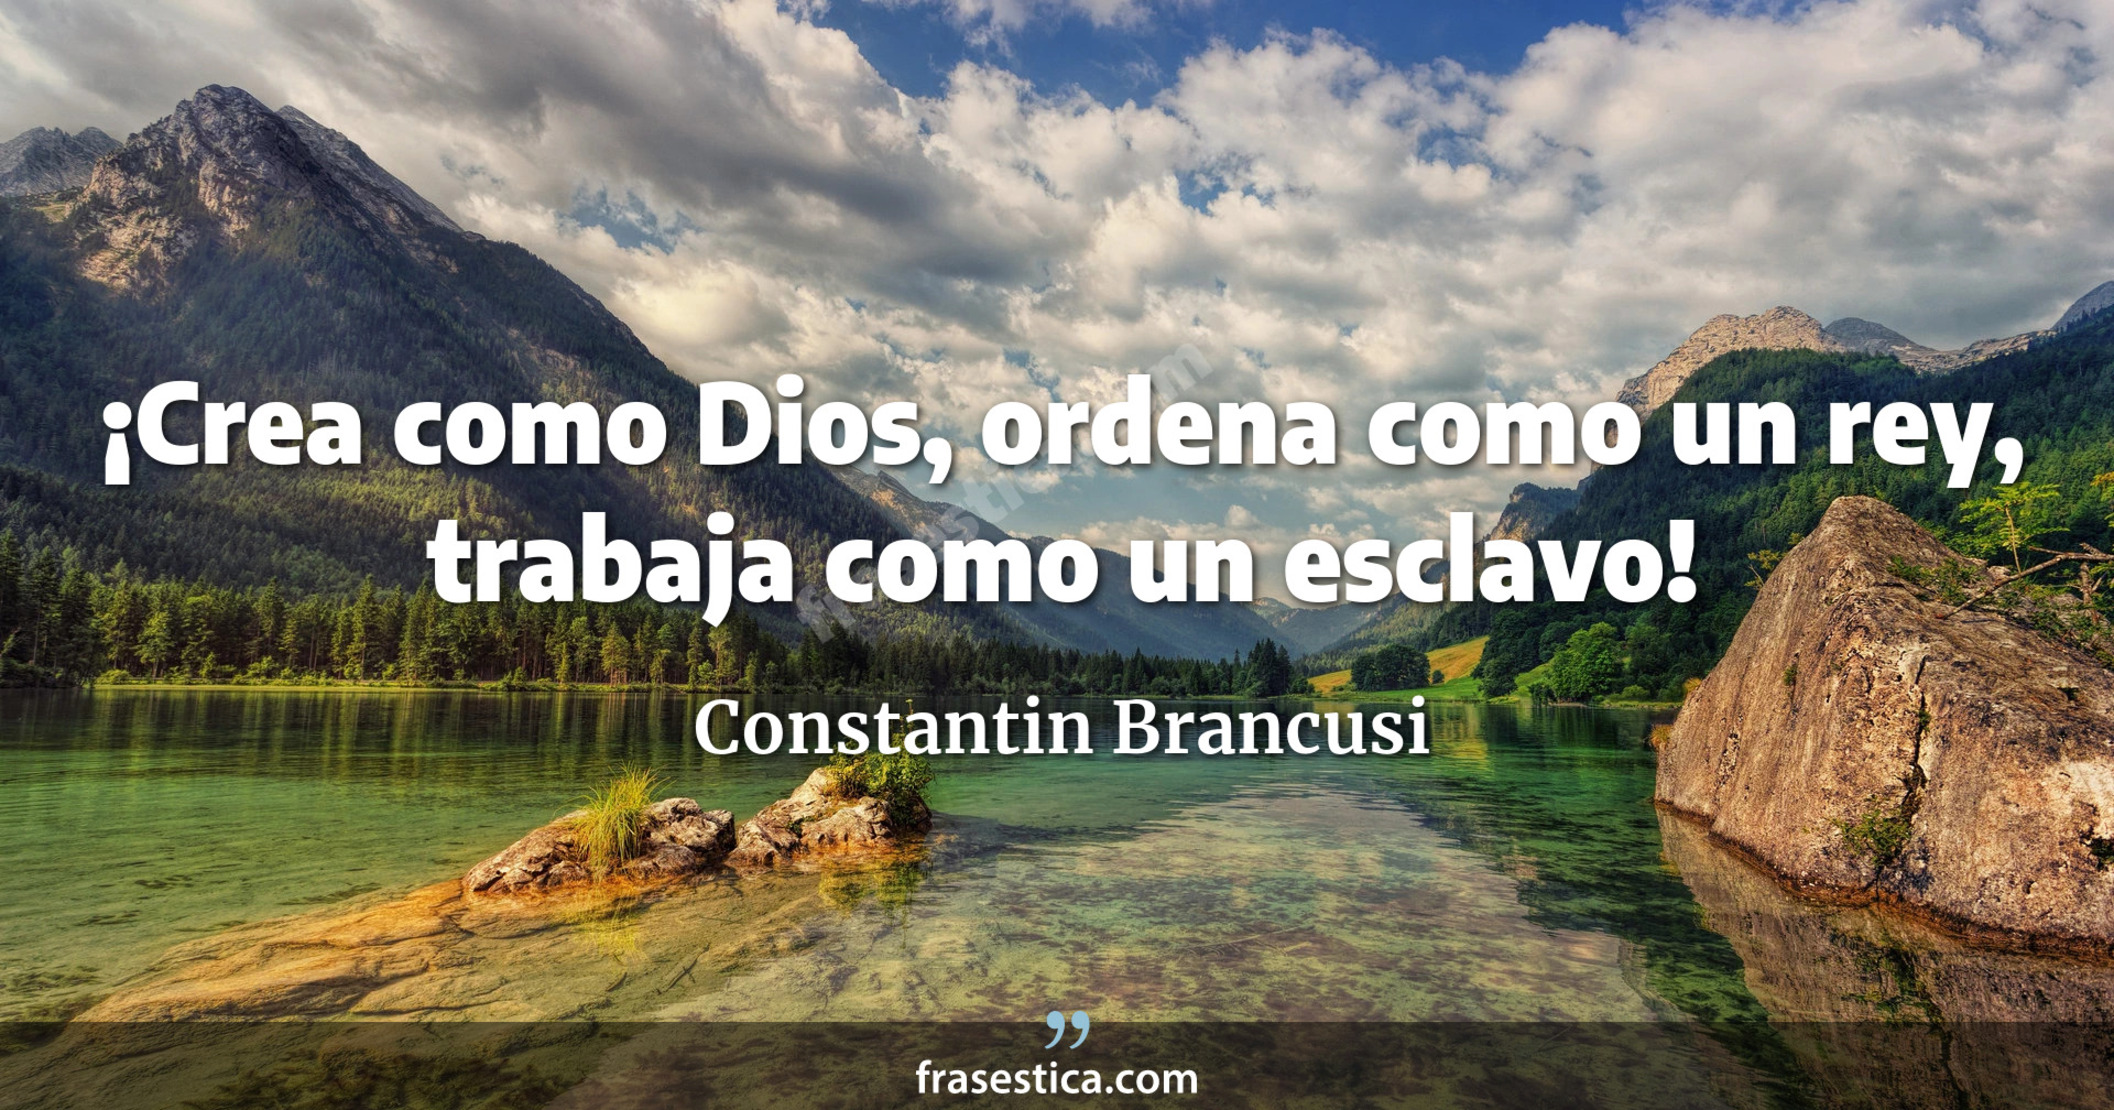 ¡Crea como Dios, ordena como un rey, trabaja como un esclavo! - Constantin Brancusi